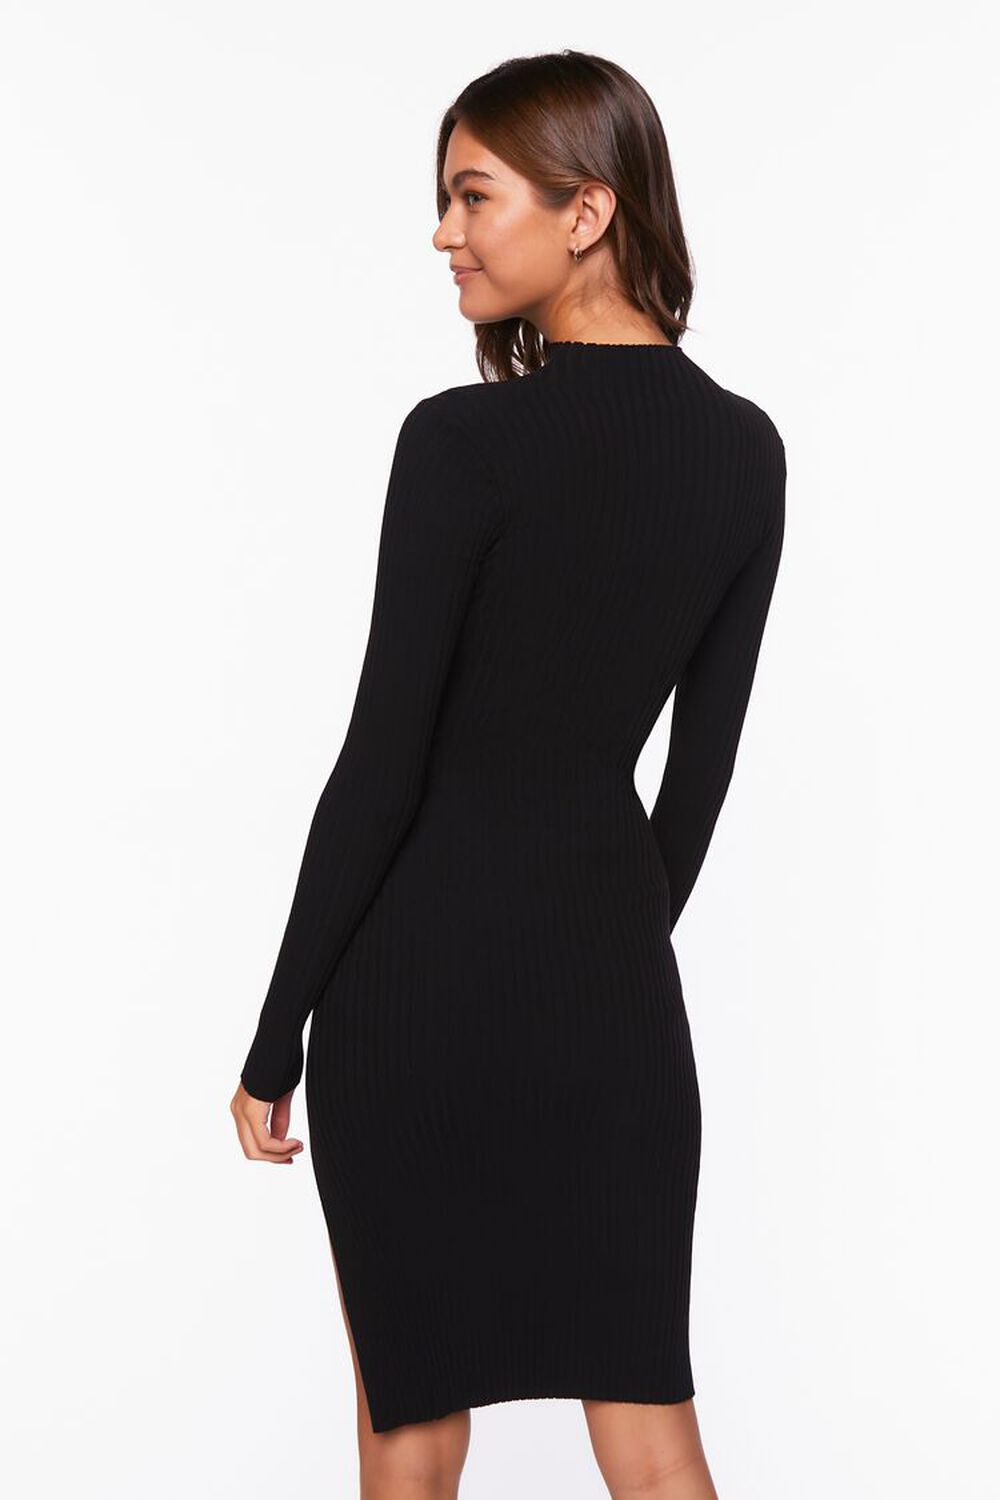 Ribbed Knee-Length Sweater Dress, image 3